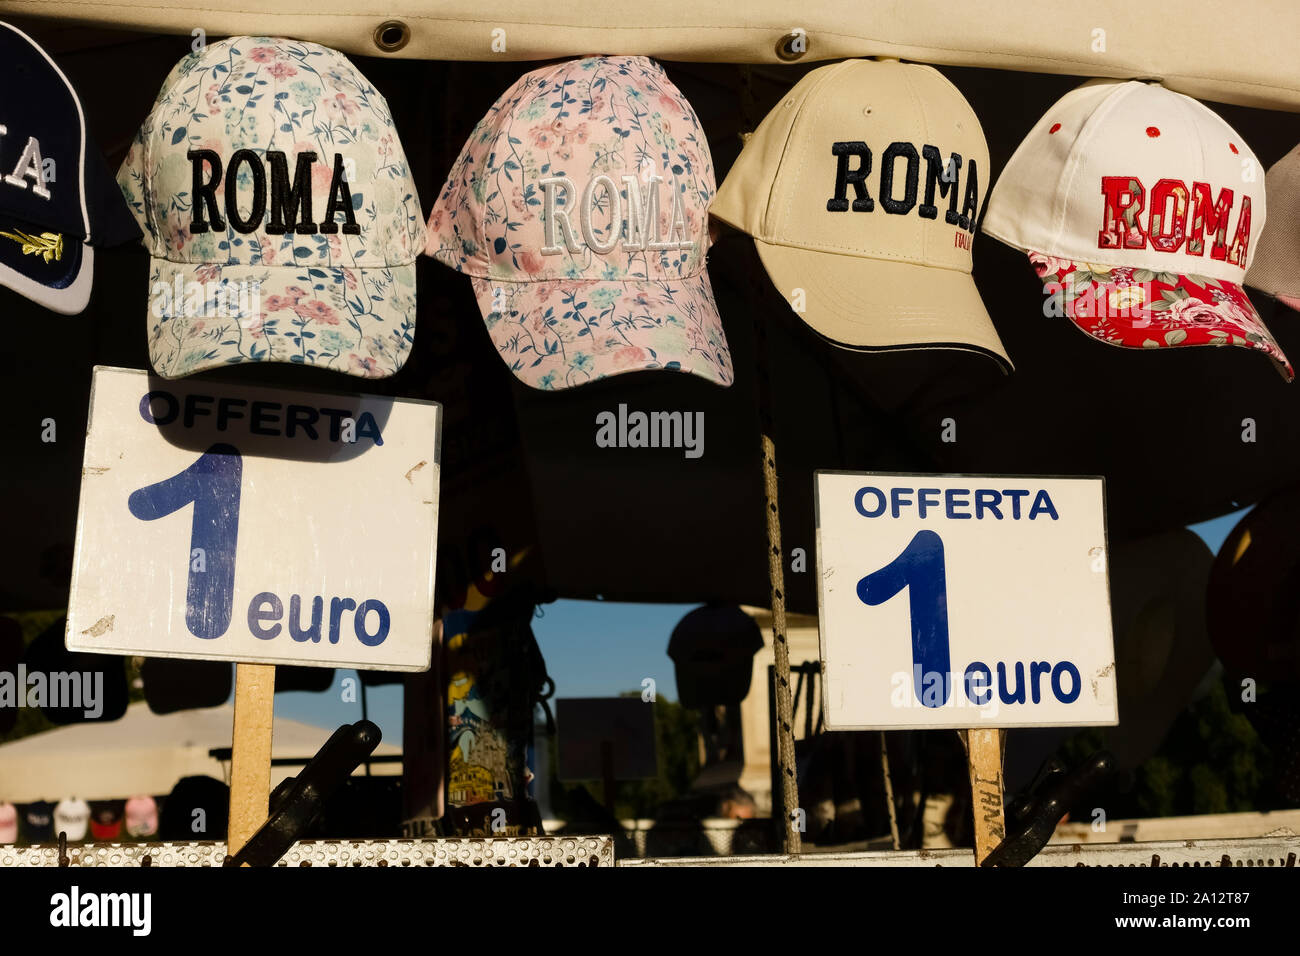 Tourist shopping, Rome hats, roman italian souvenirs on display at a stall. Rome, Italy, Europe, EU. Stock Photo